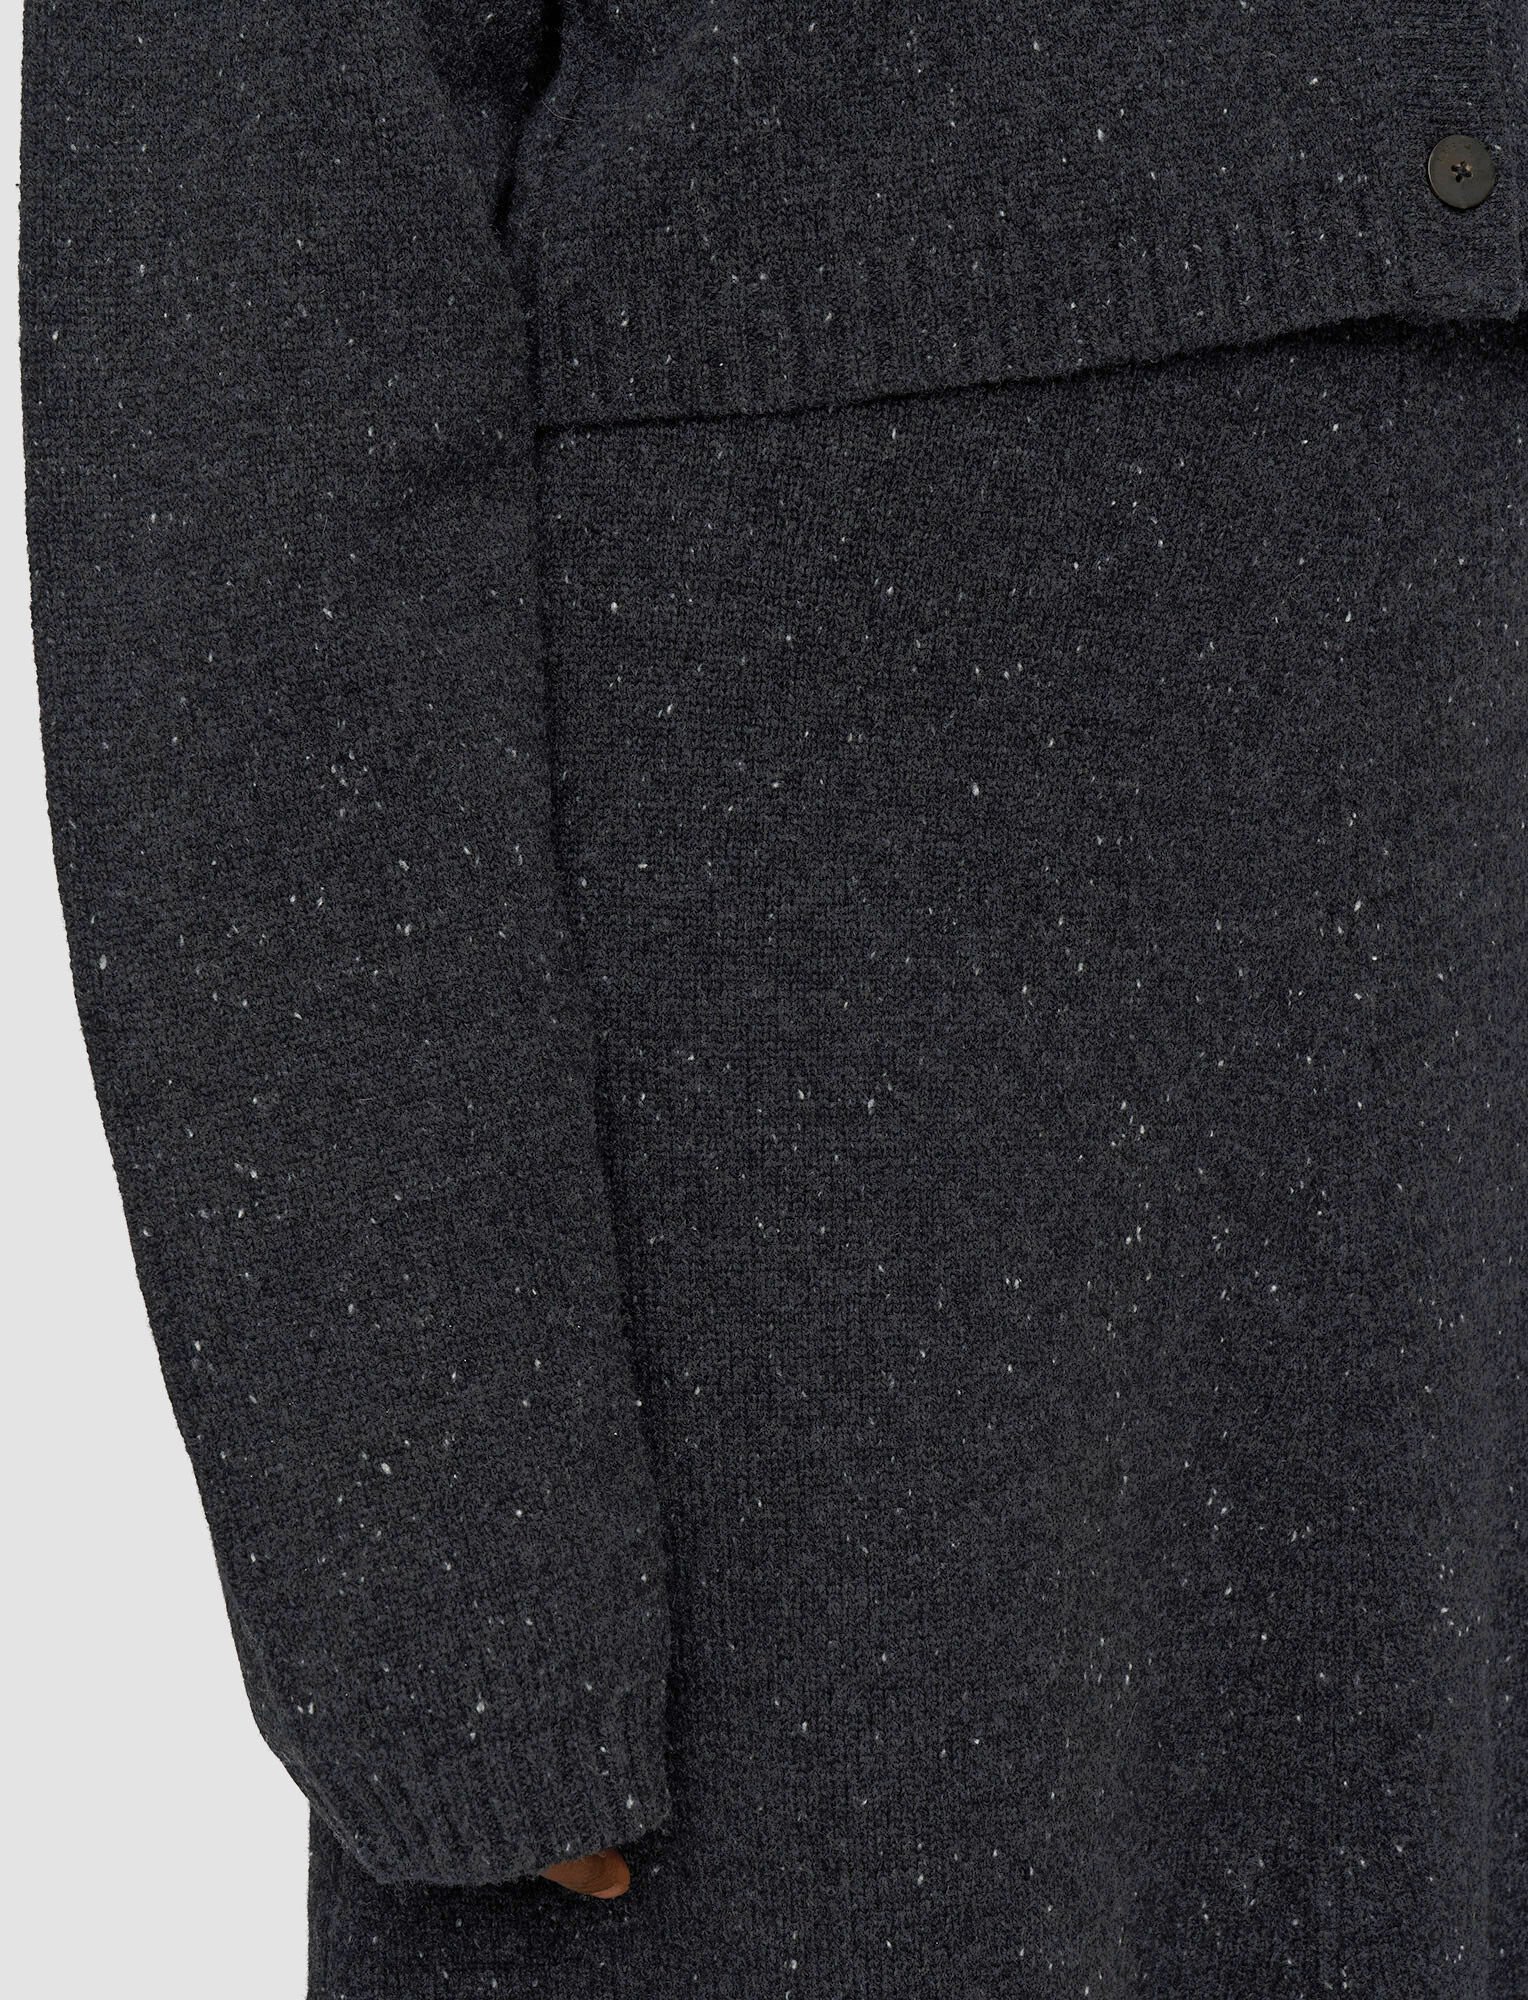 Joseph, Tweed Knit Cardigan, in Black